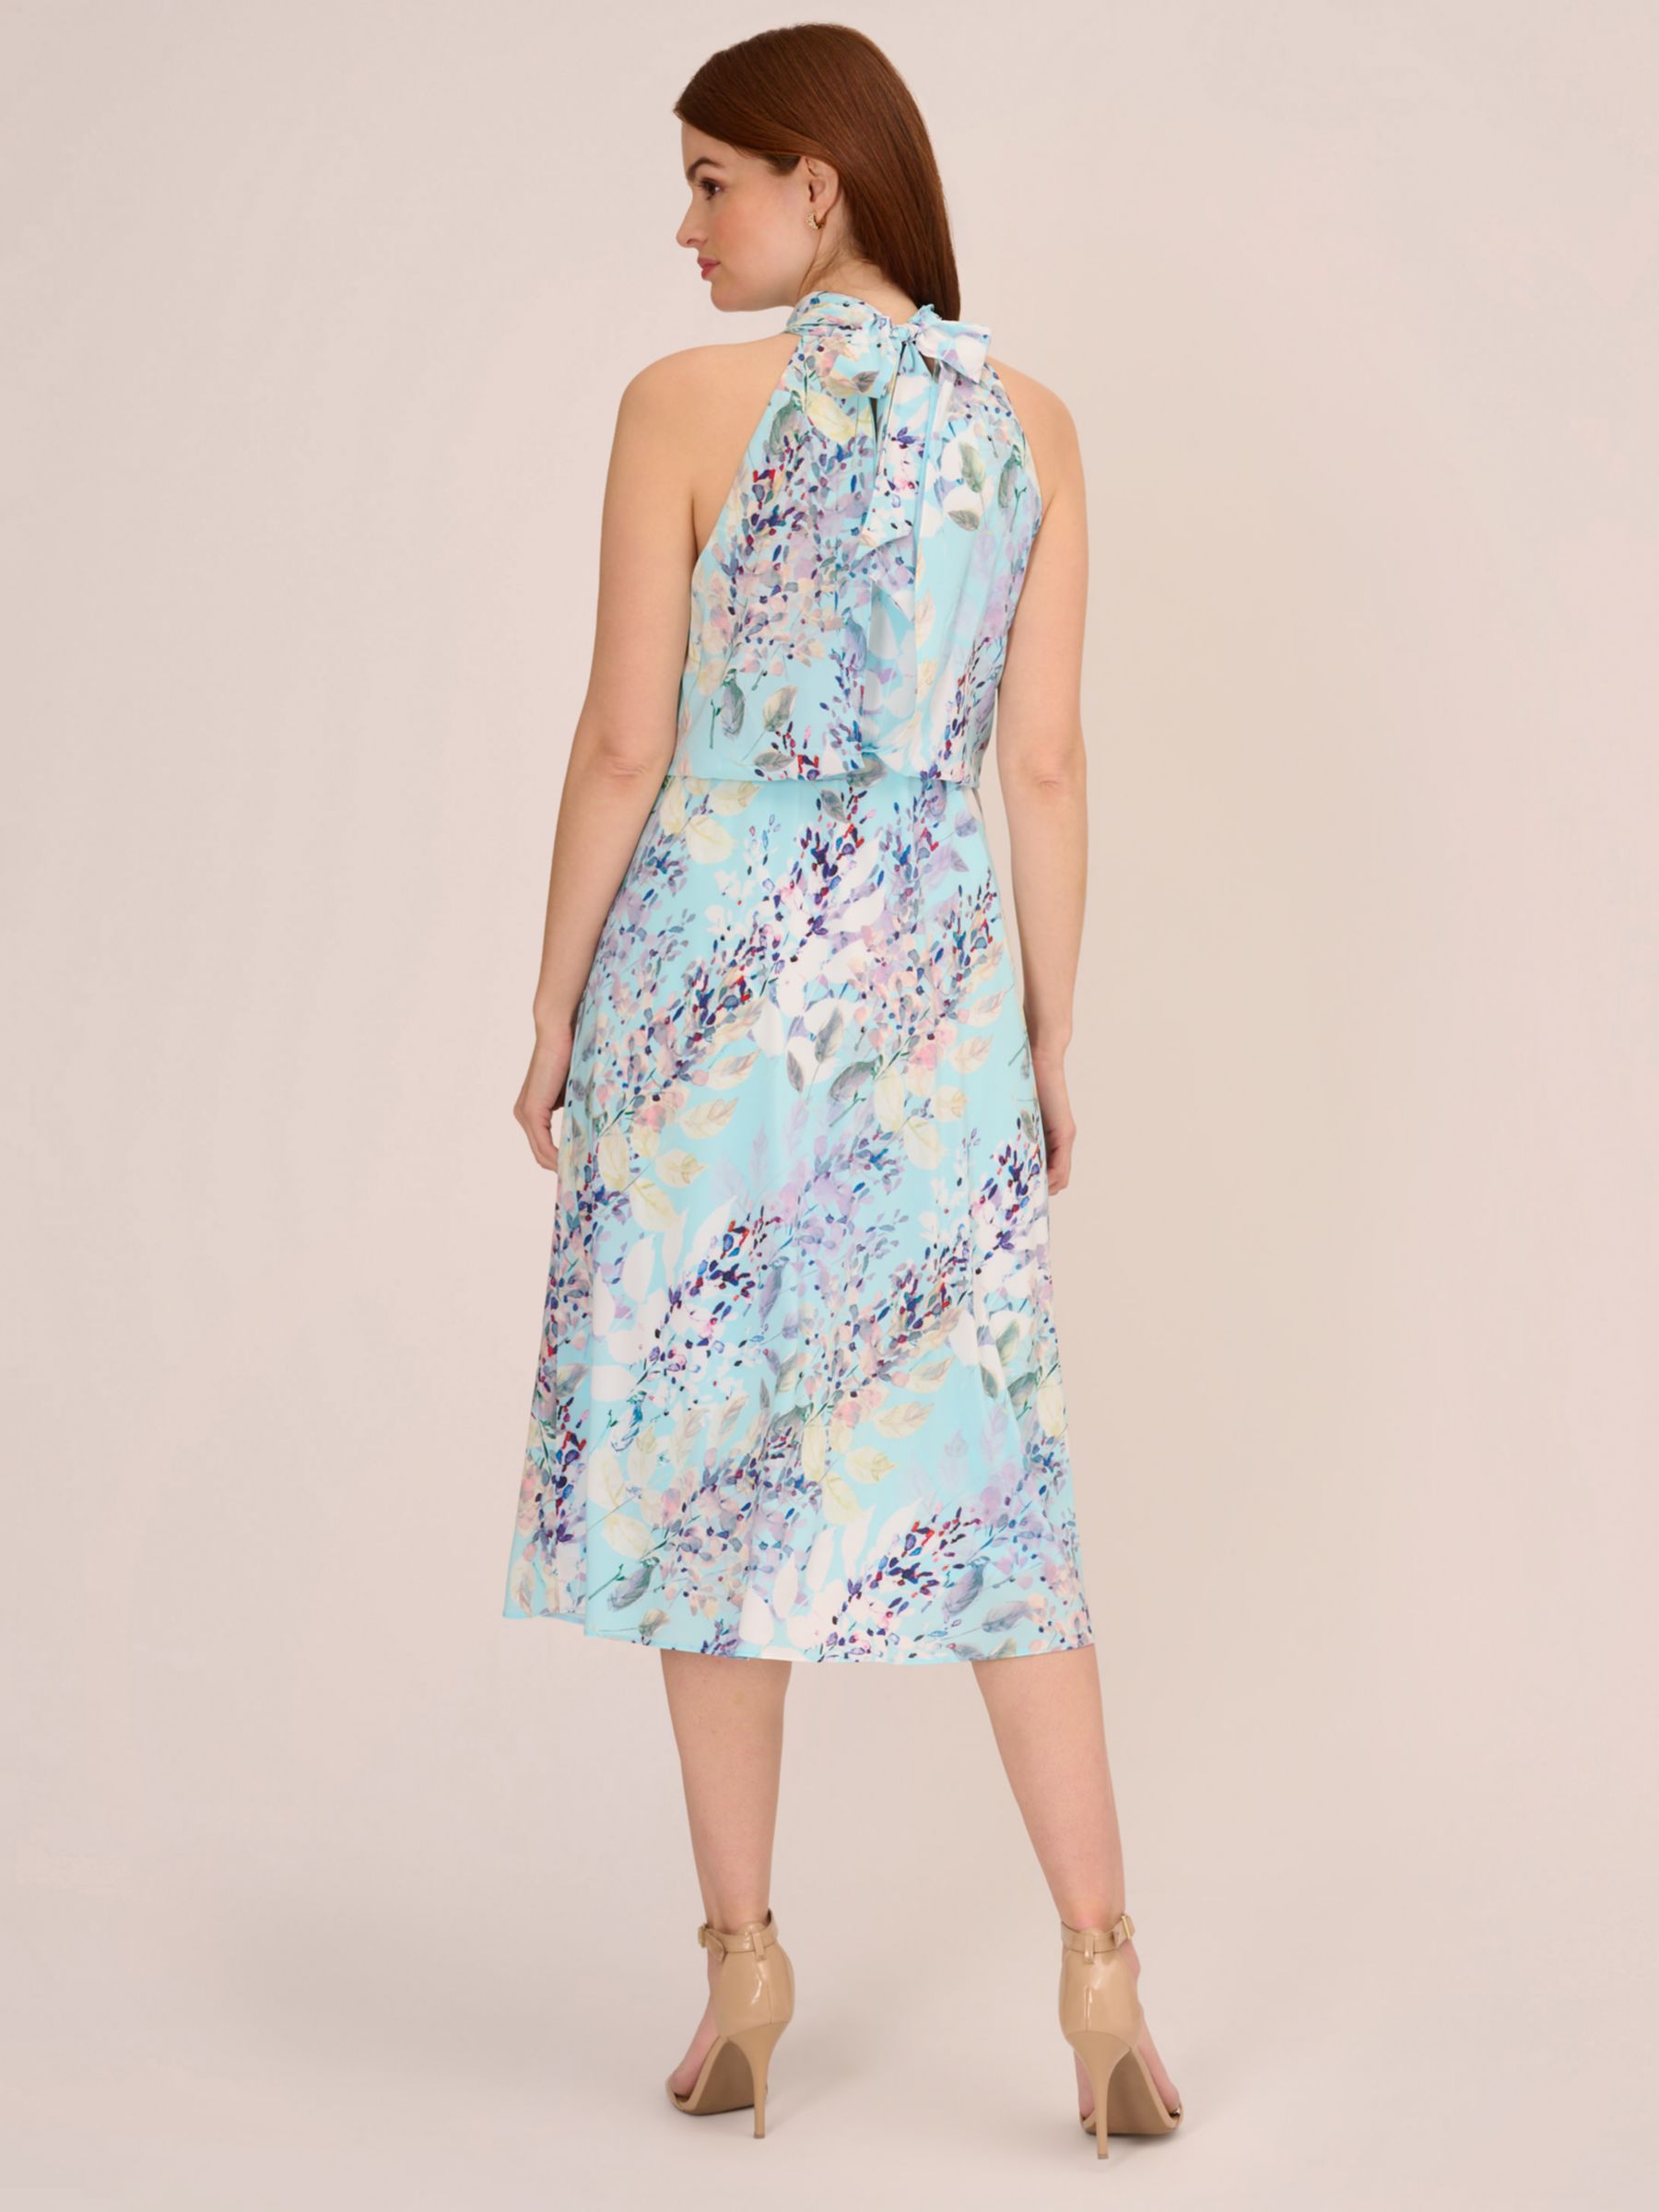 Adrianna Papell Watercolor Floral Midi Dress, Light Blue/Multi, 6